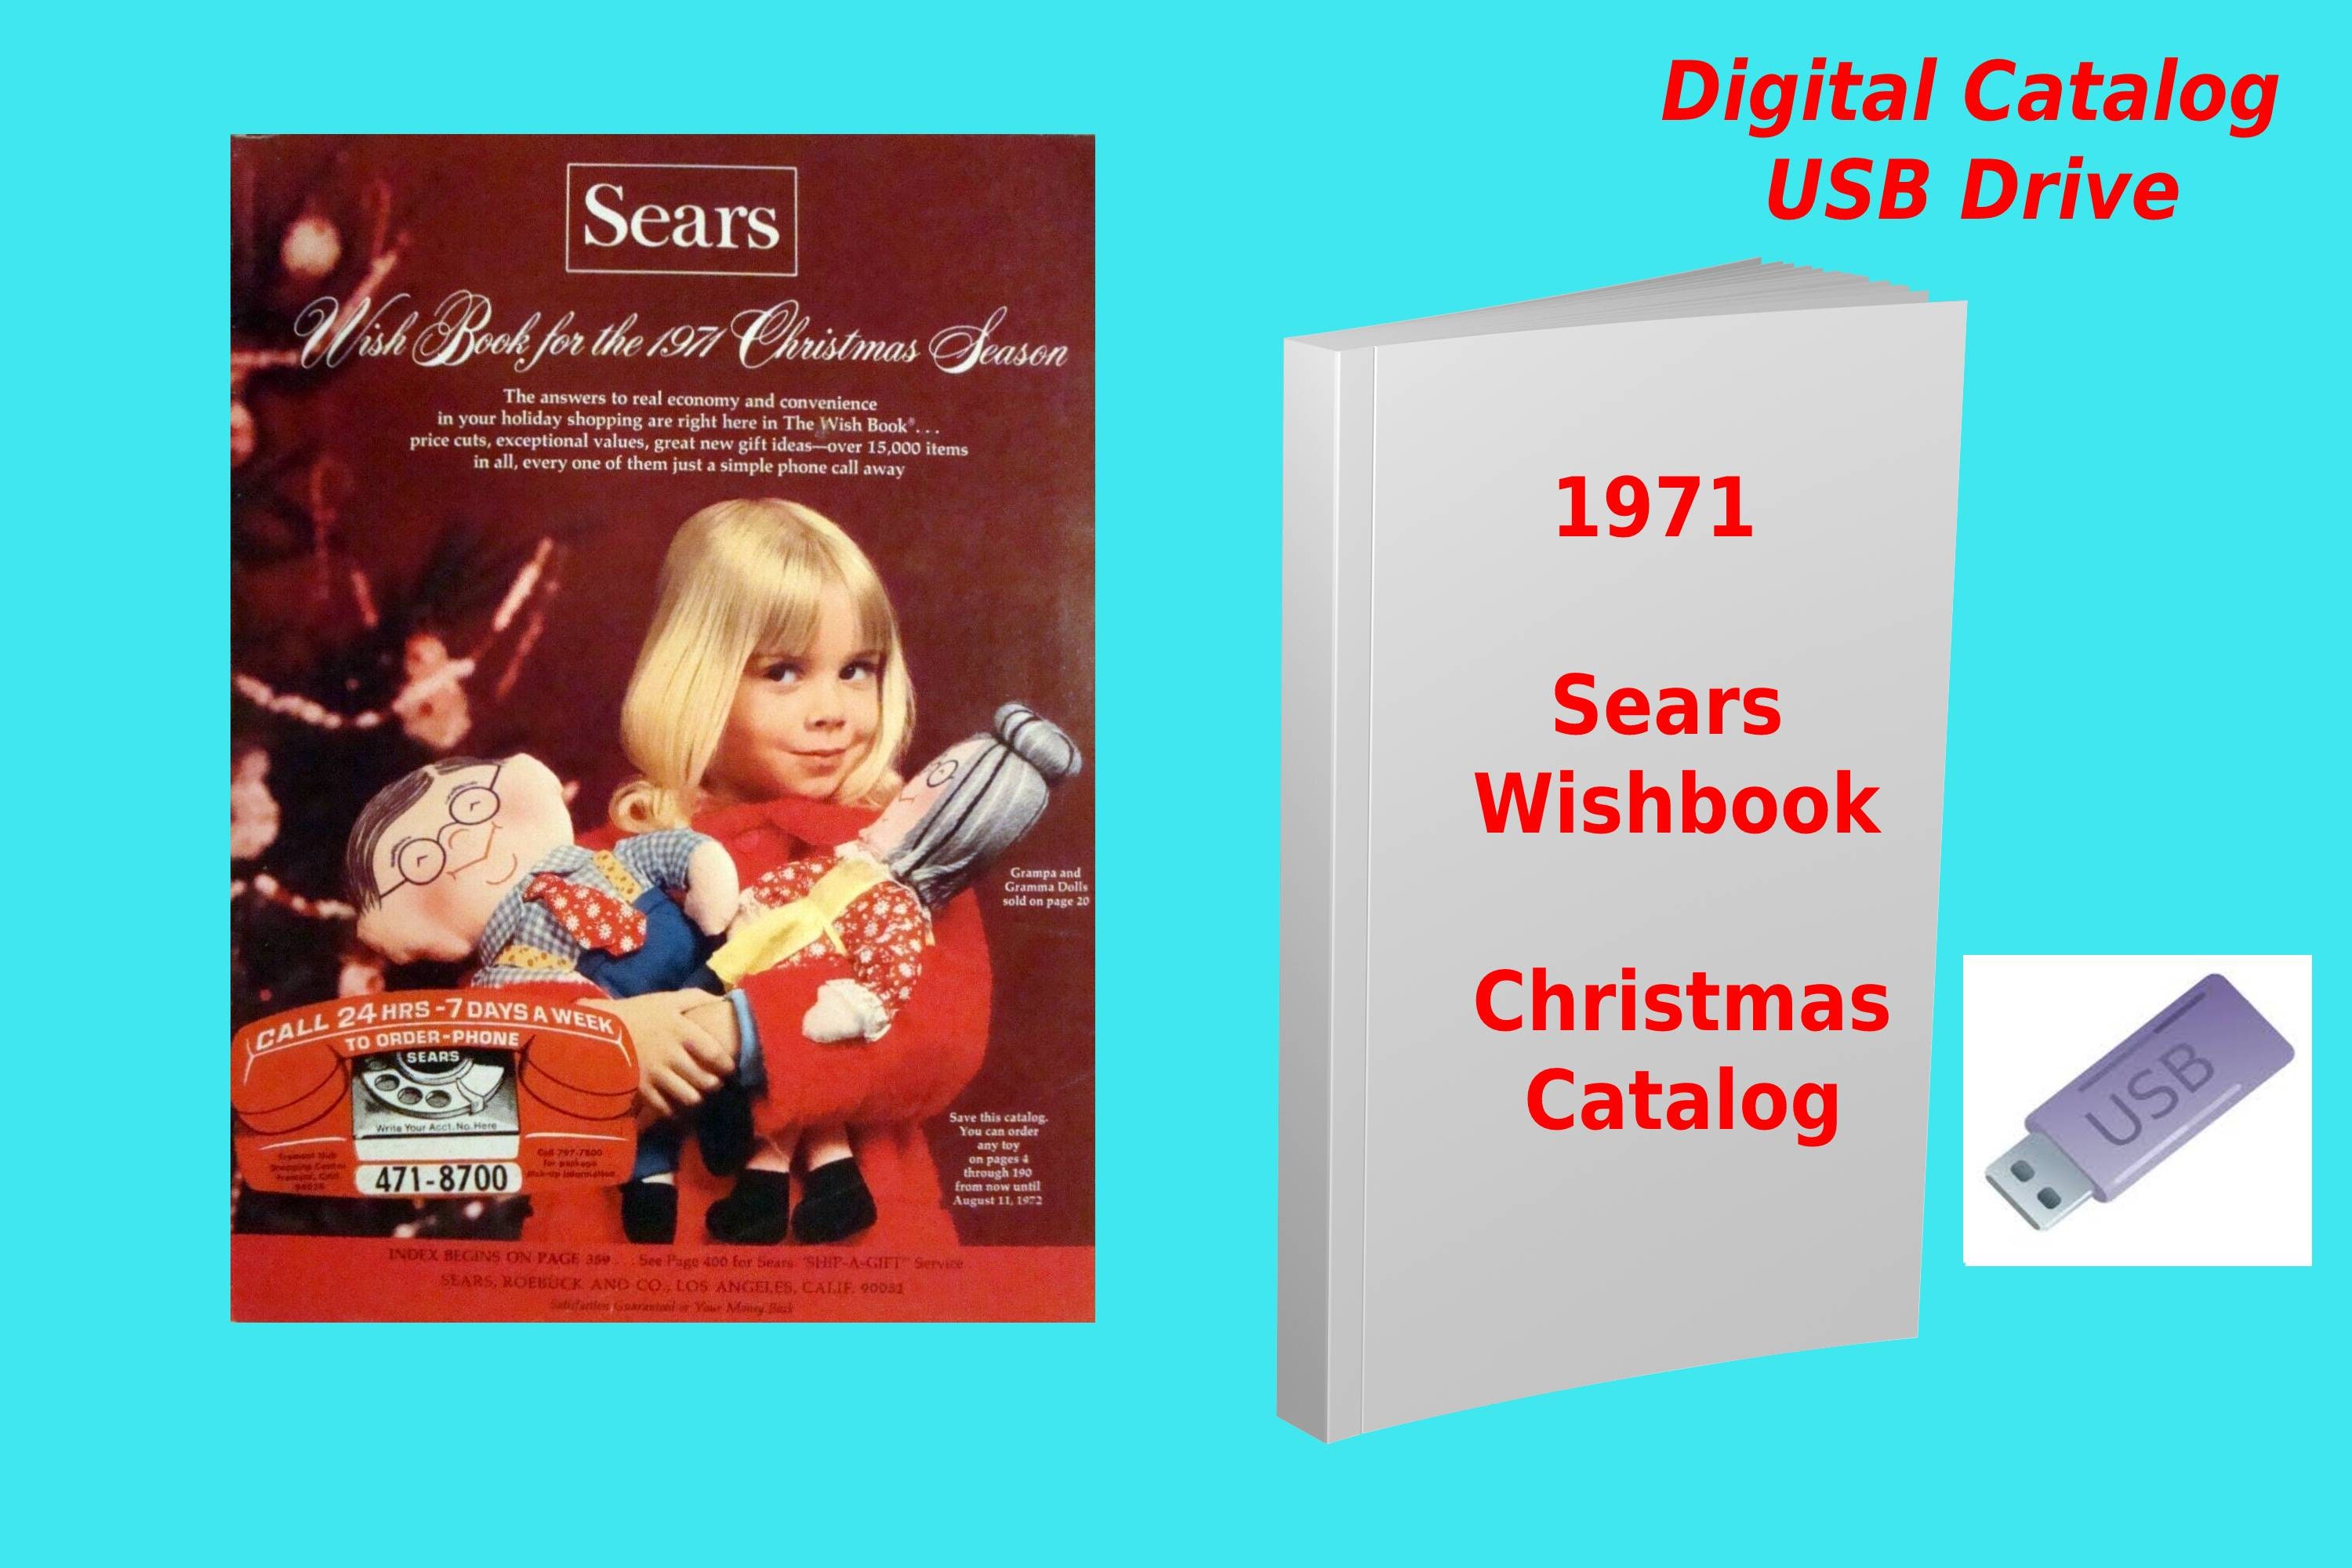 1971 Sears Christmas Wishbook Catalog on USB Drive or CD